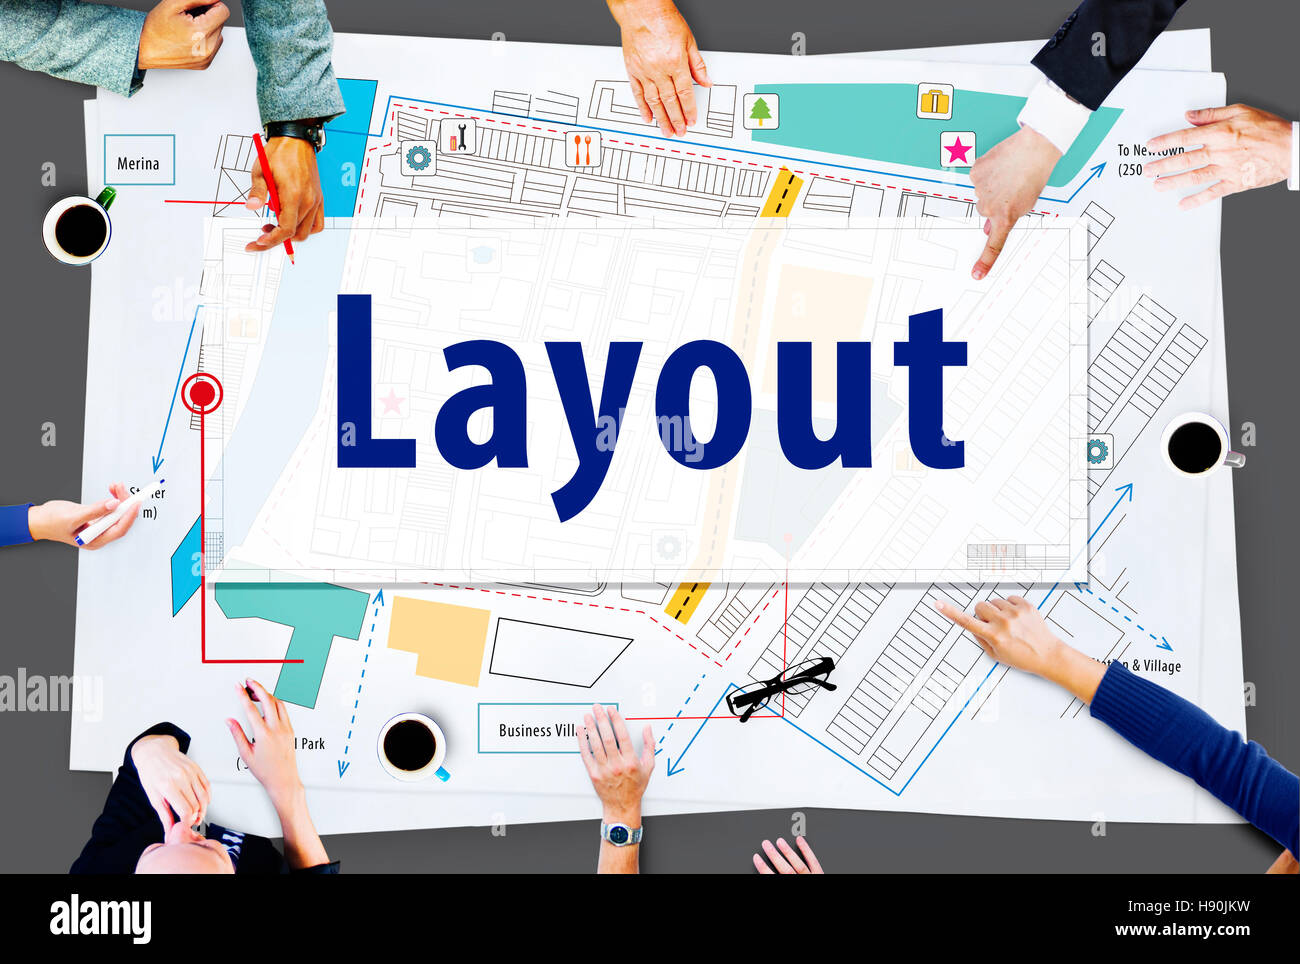 Layout Design City Plan Location Concept Stock Photo